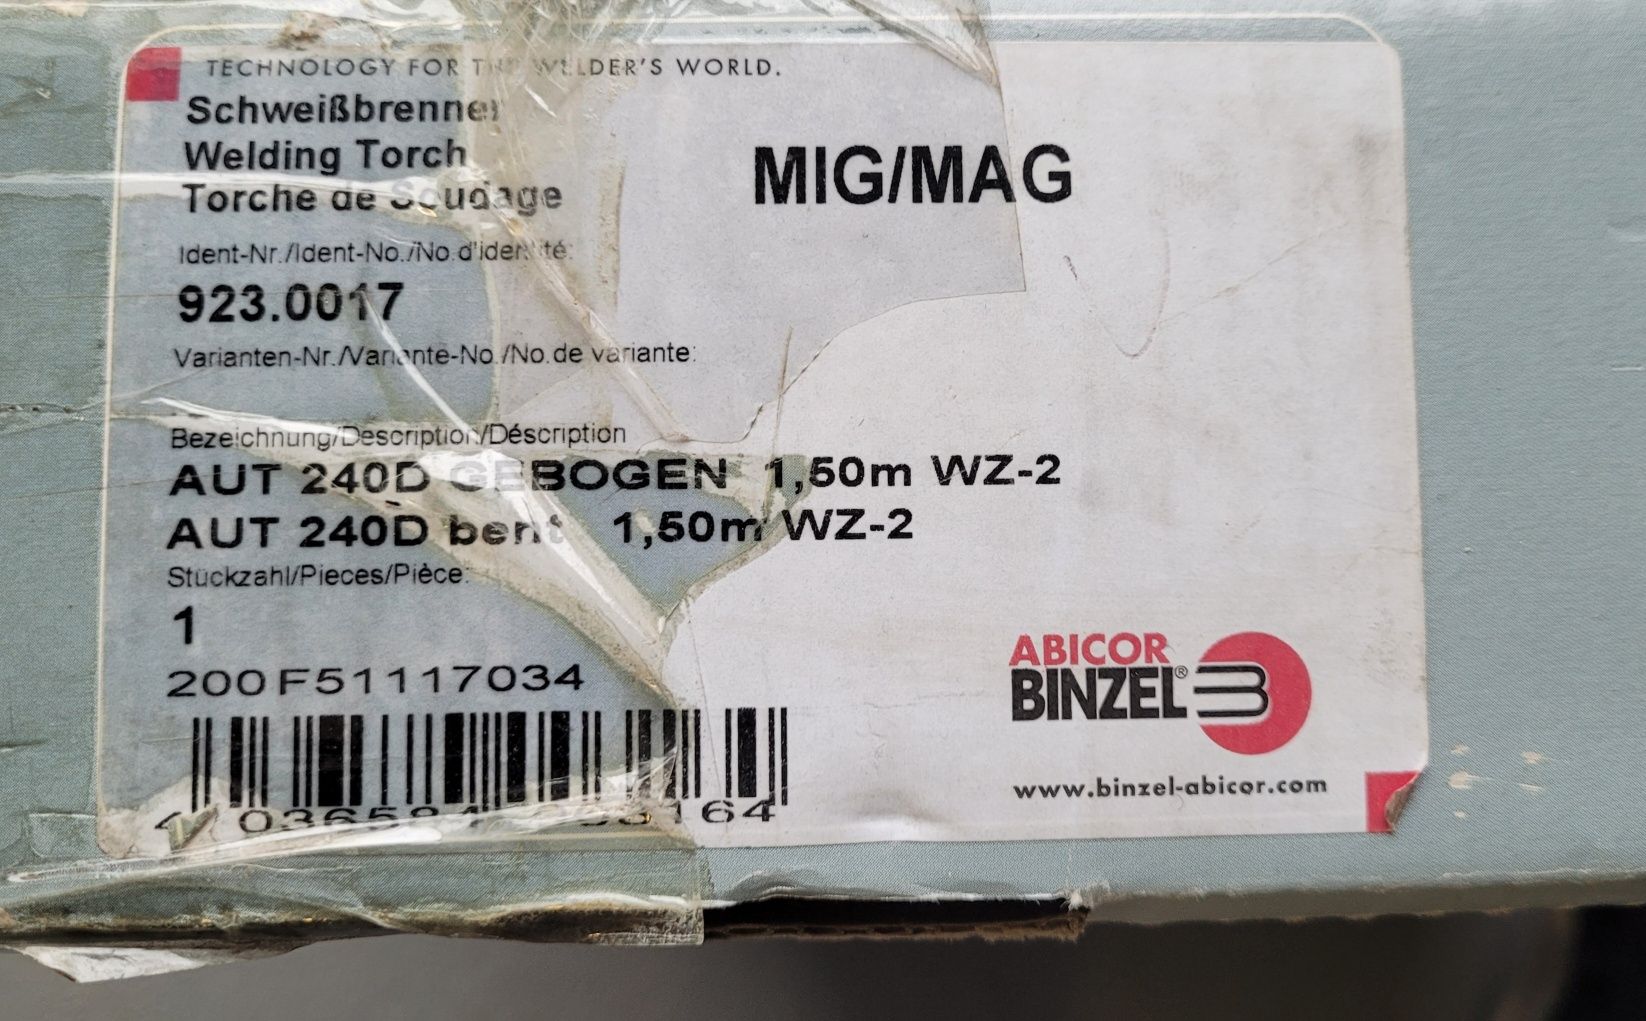 Uchwyt spawalniczy MIG/MAG ABICOR BINZEL AUT240D Gebogen 1,50m WZ-2